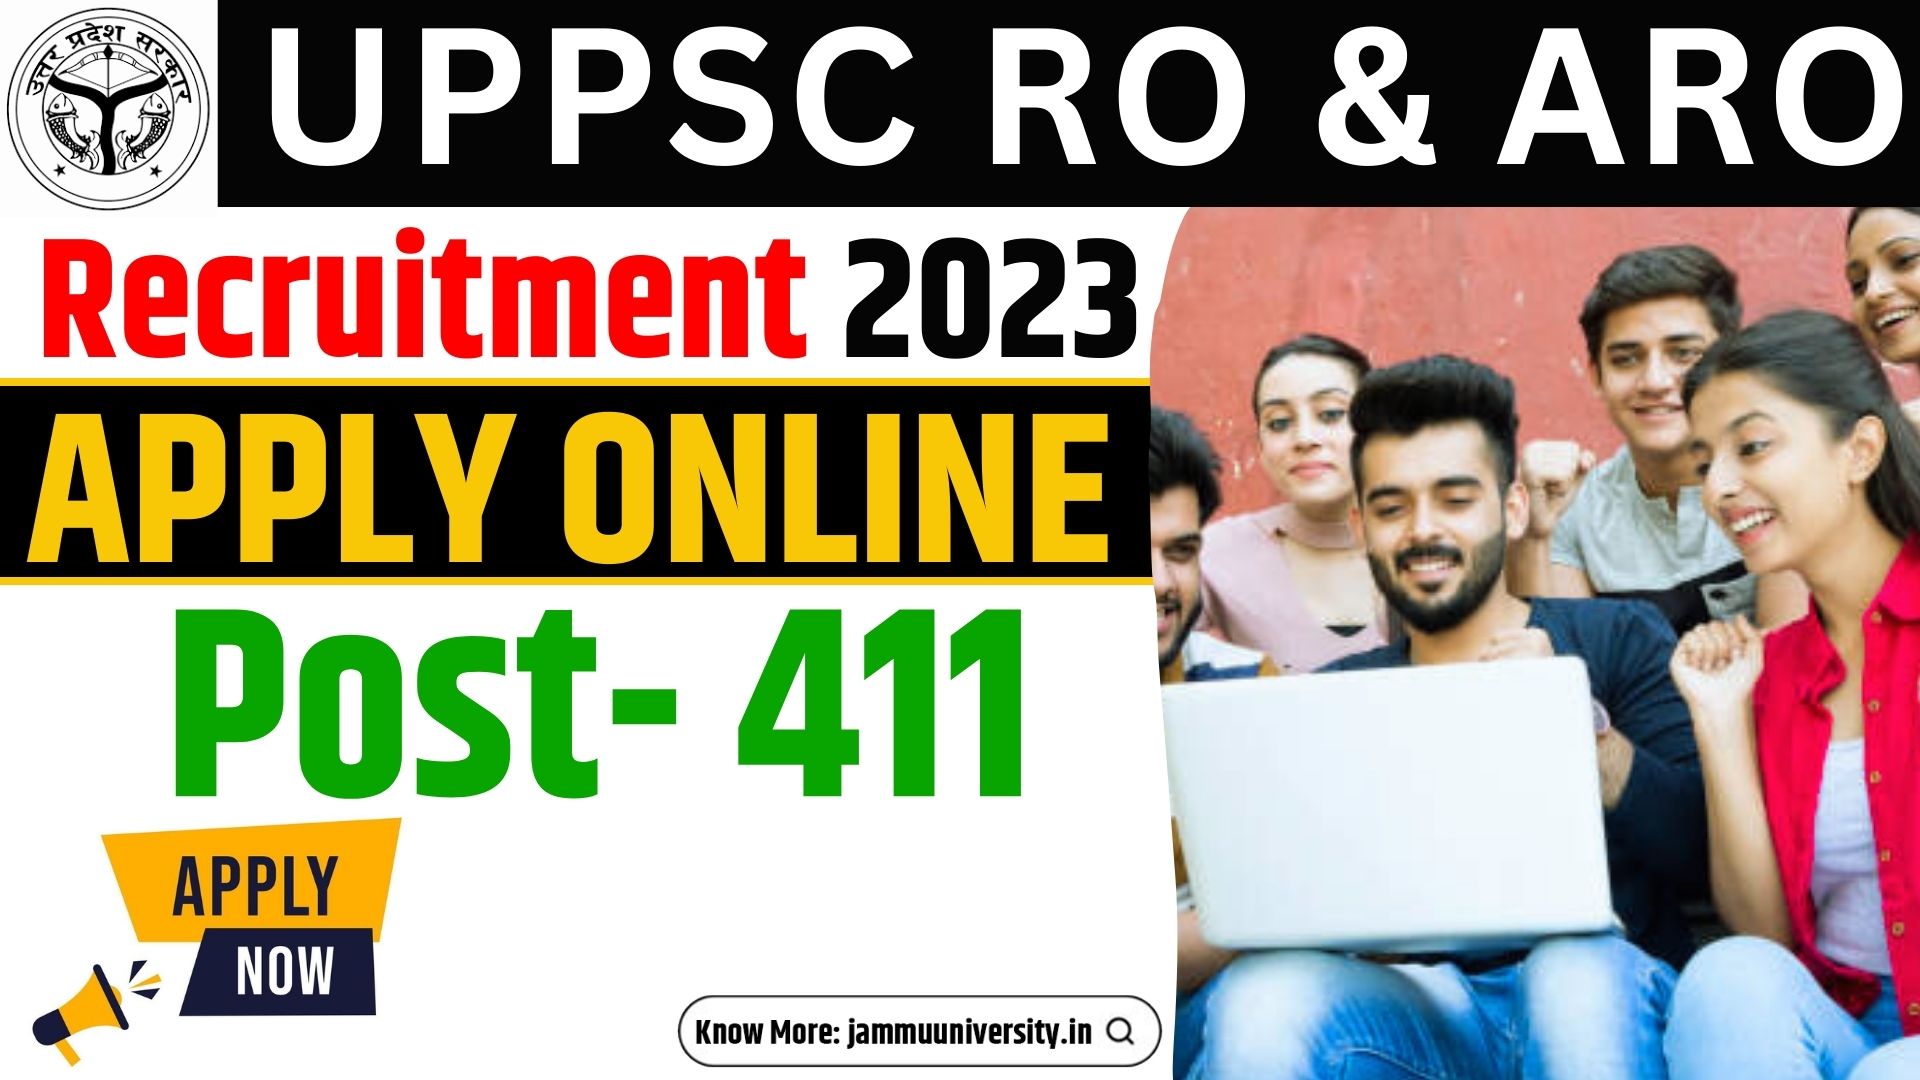 UPPSC RO ARO Recruitment 2023